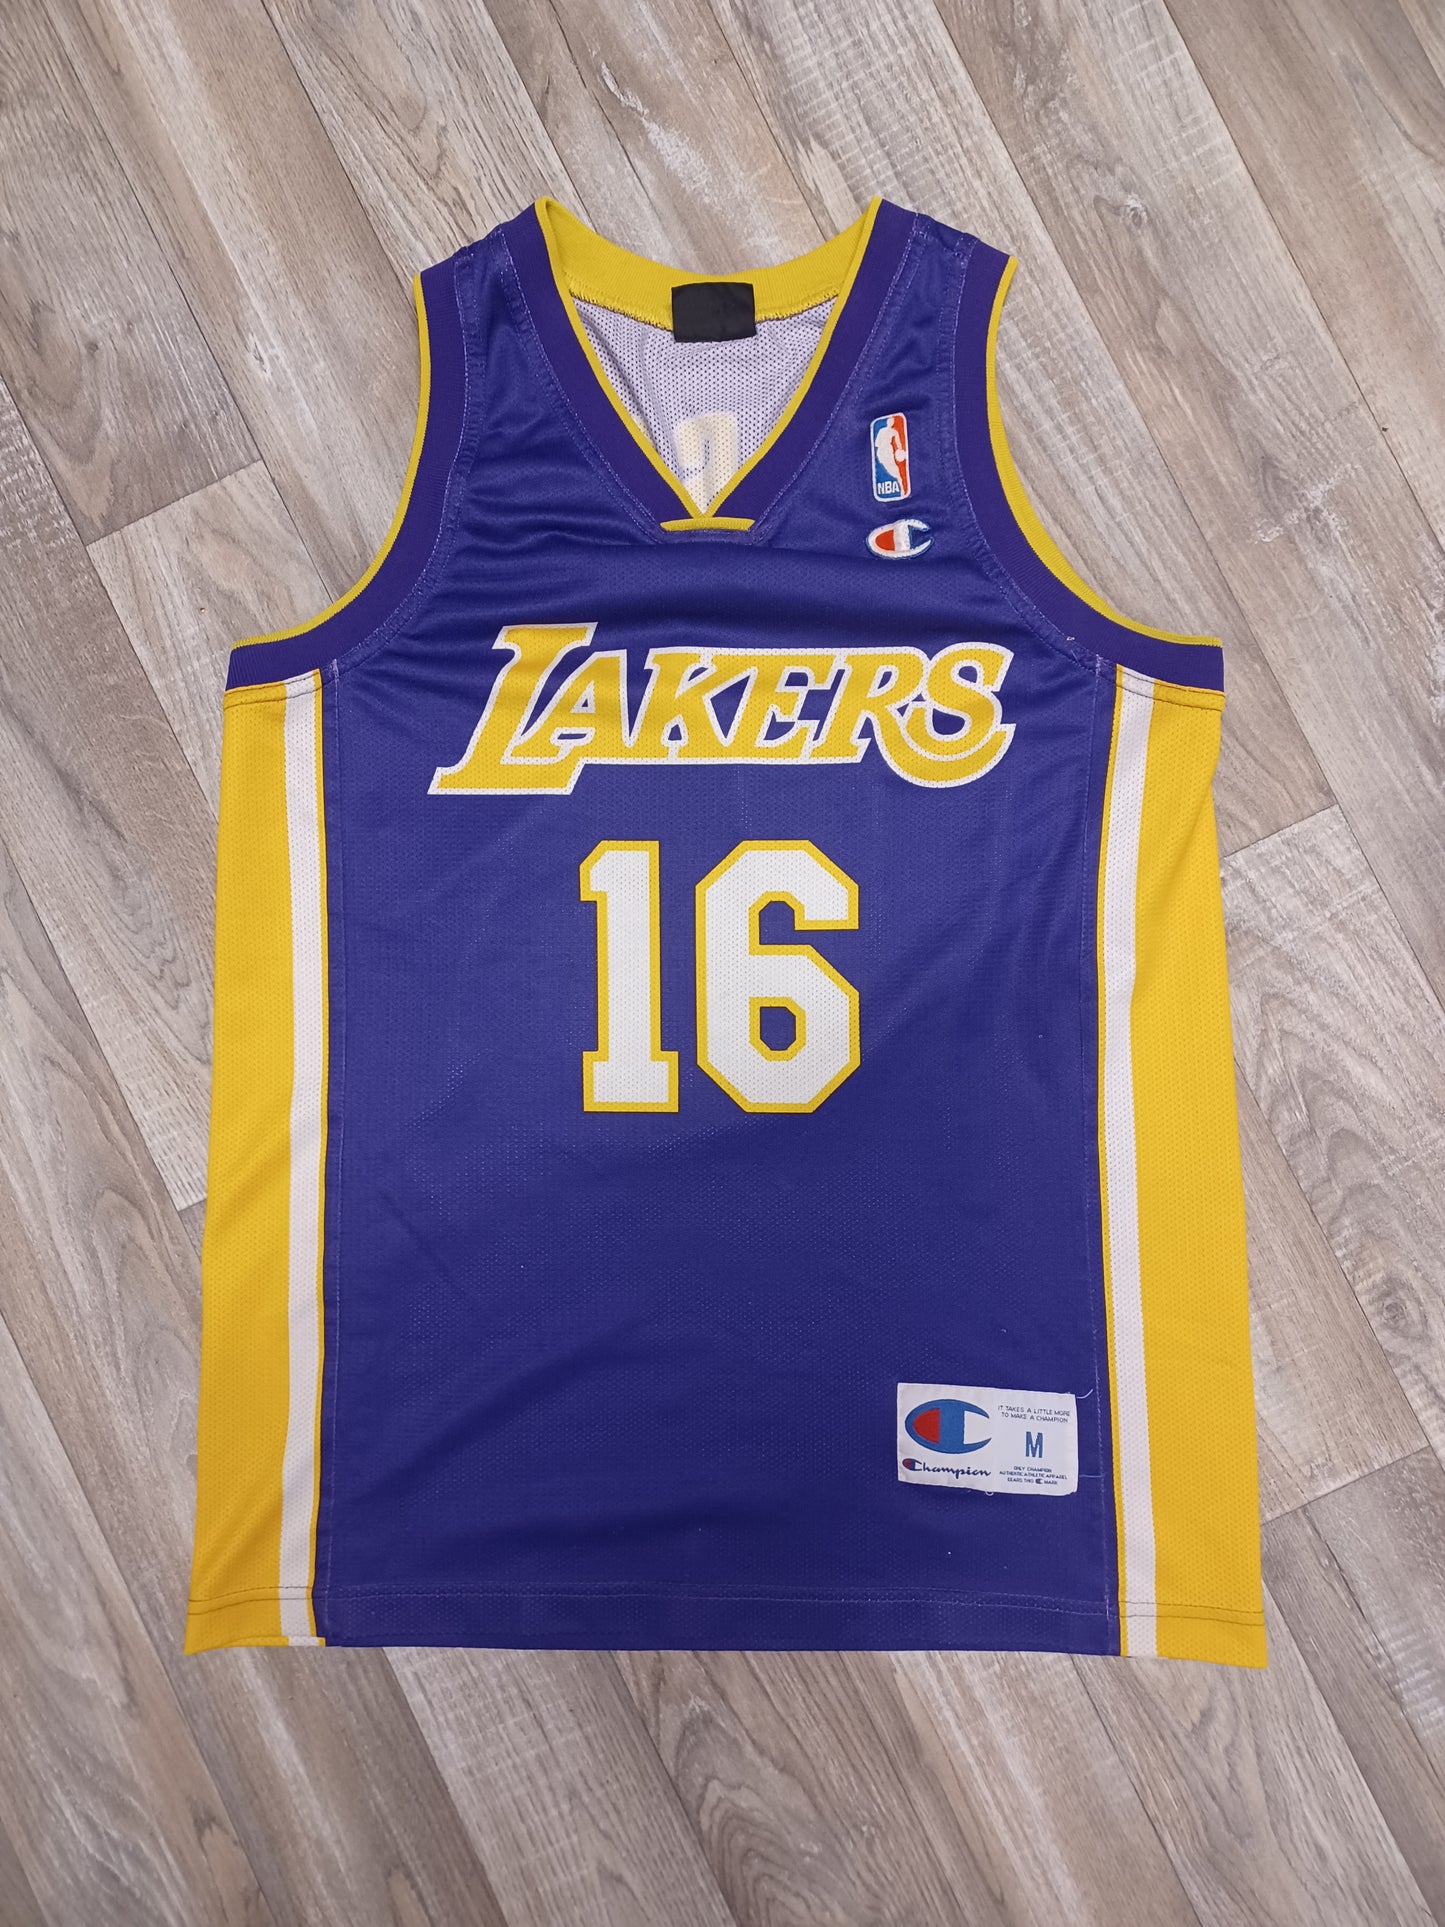 Pau Gasol Los Angeles Lakers Jersey Size Medium